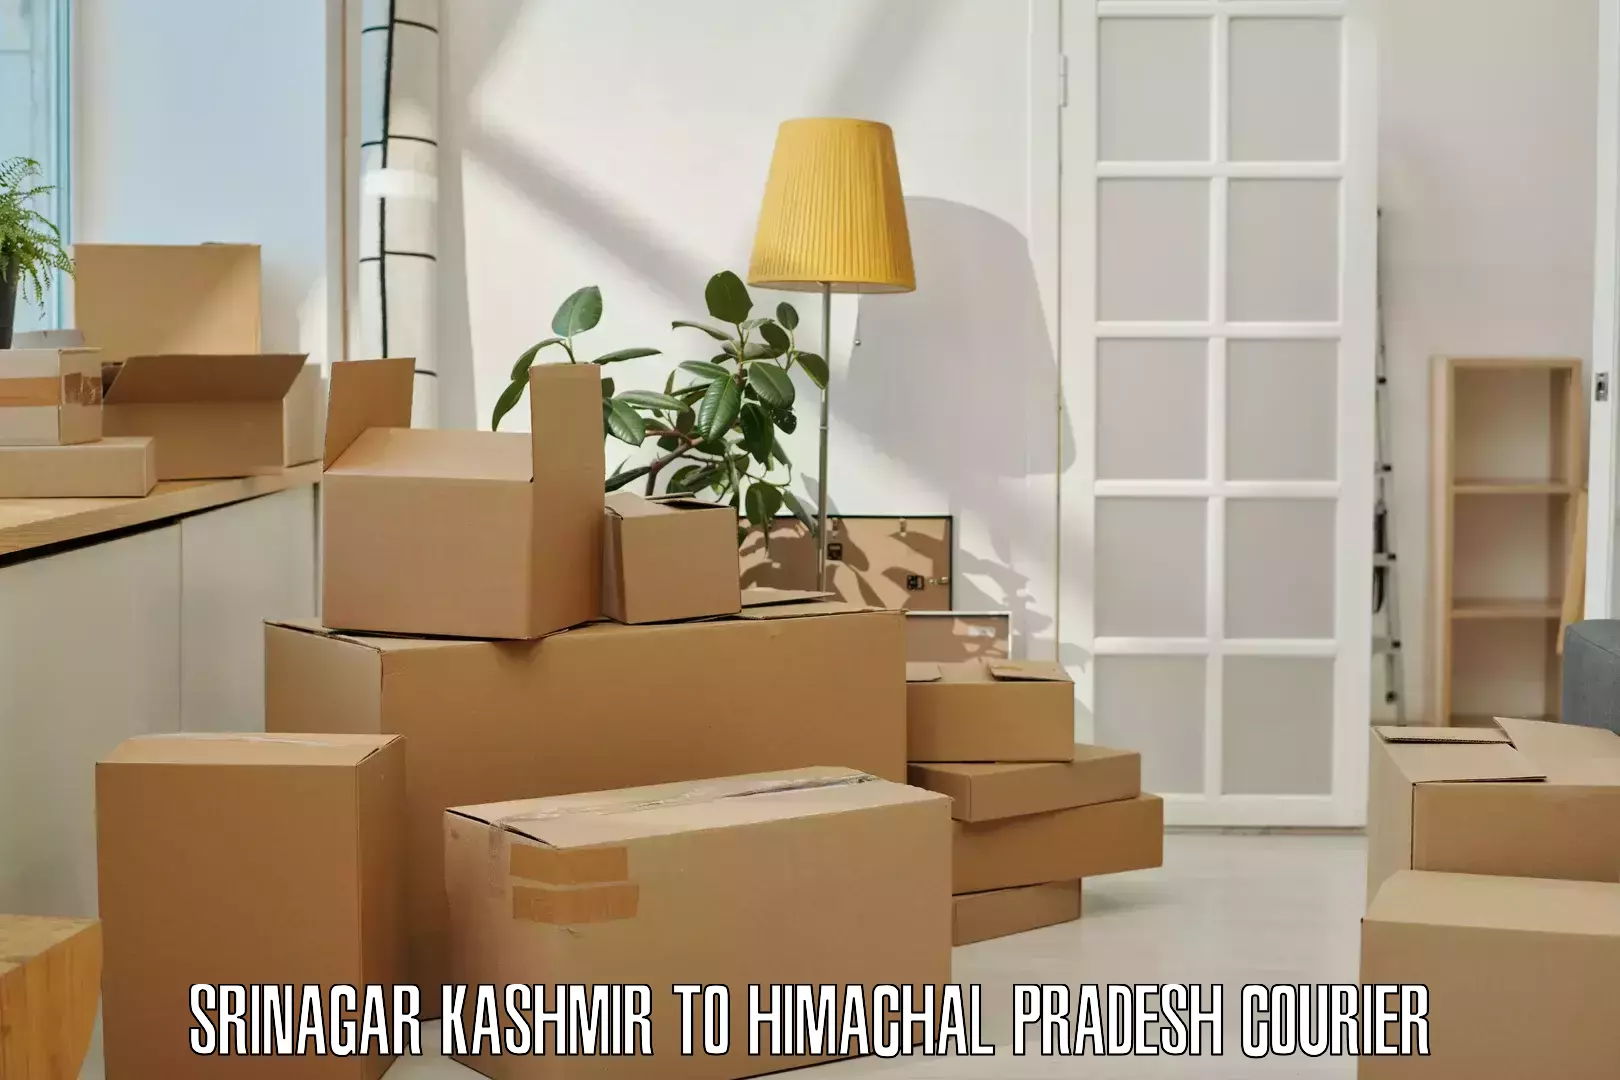 Professional courier handling Srinagar Kashmir to Himachal Pradesh